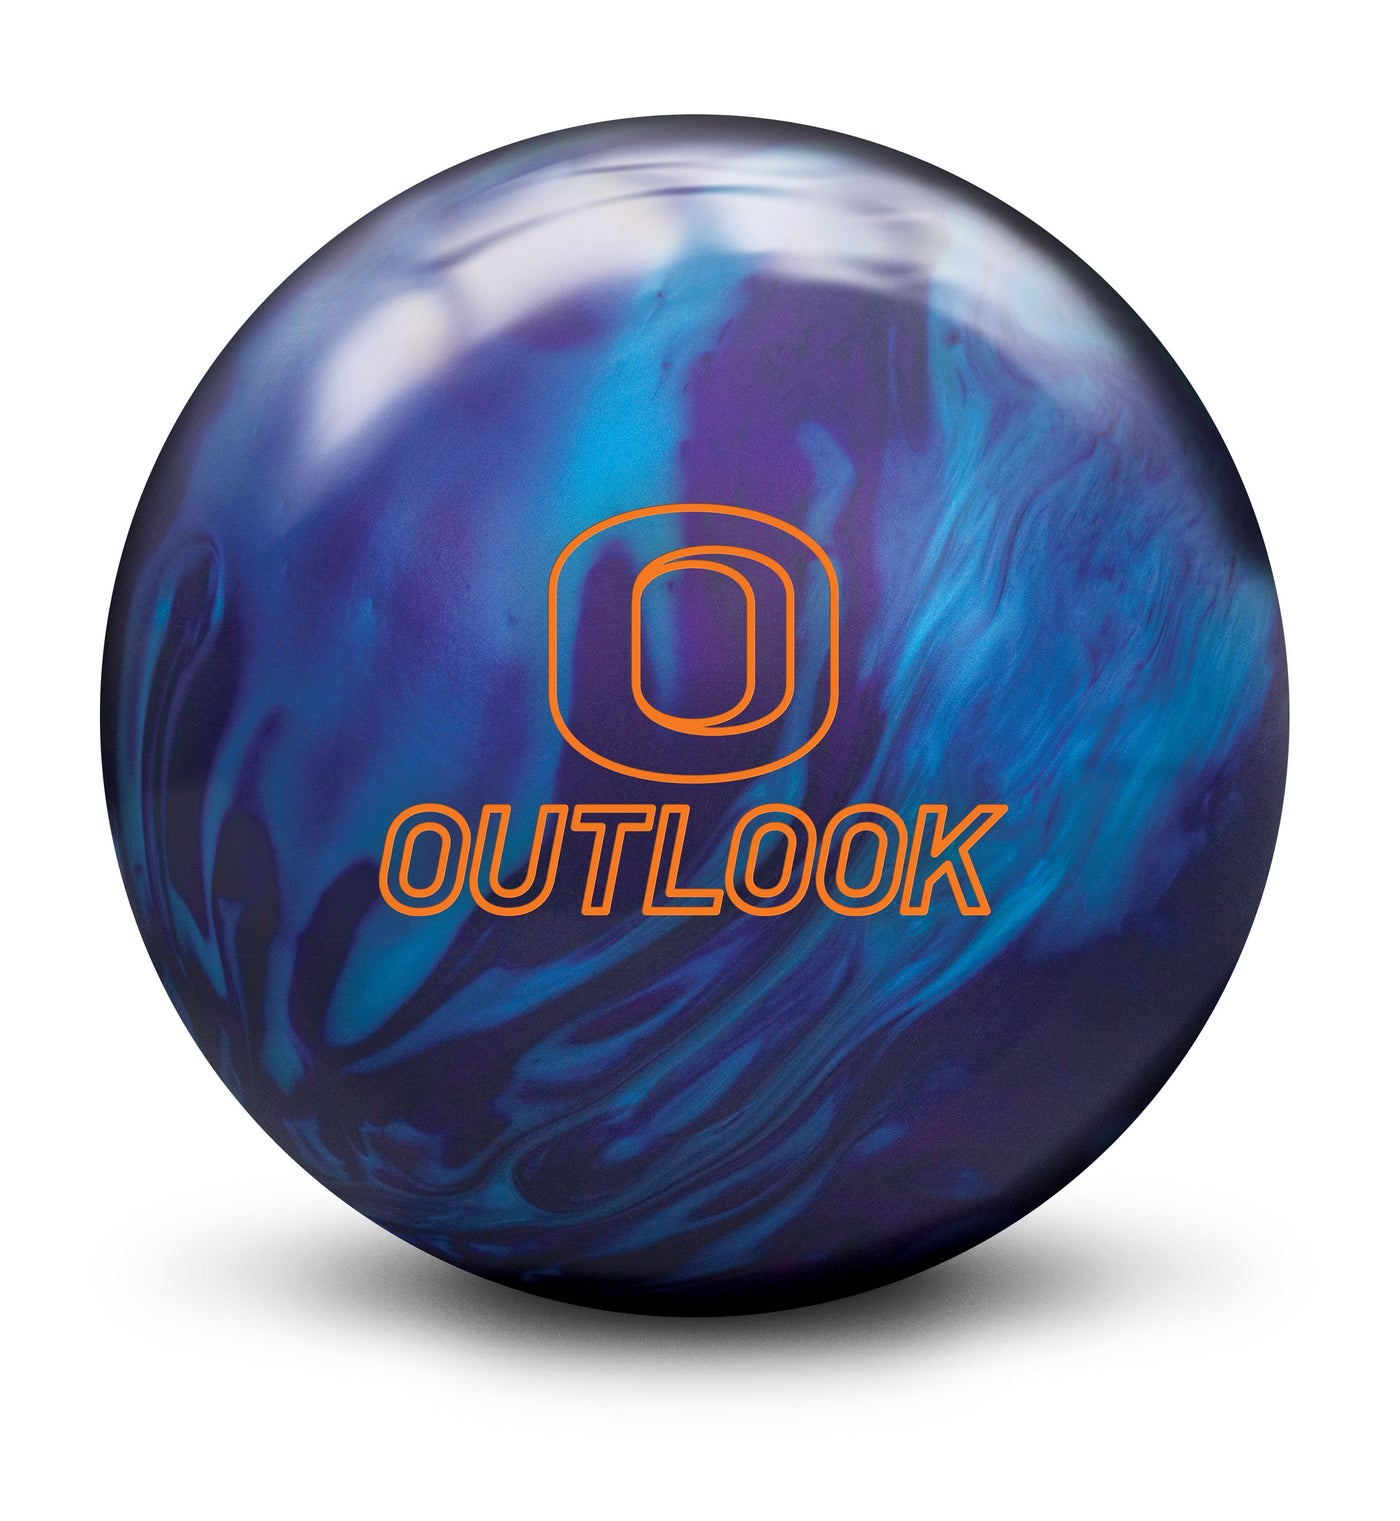 Outlook Bowling Ball